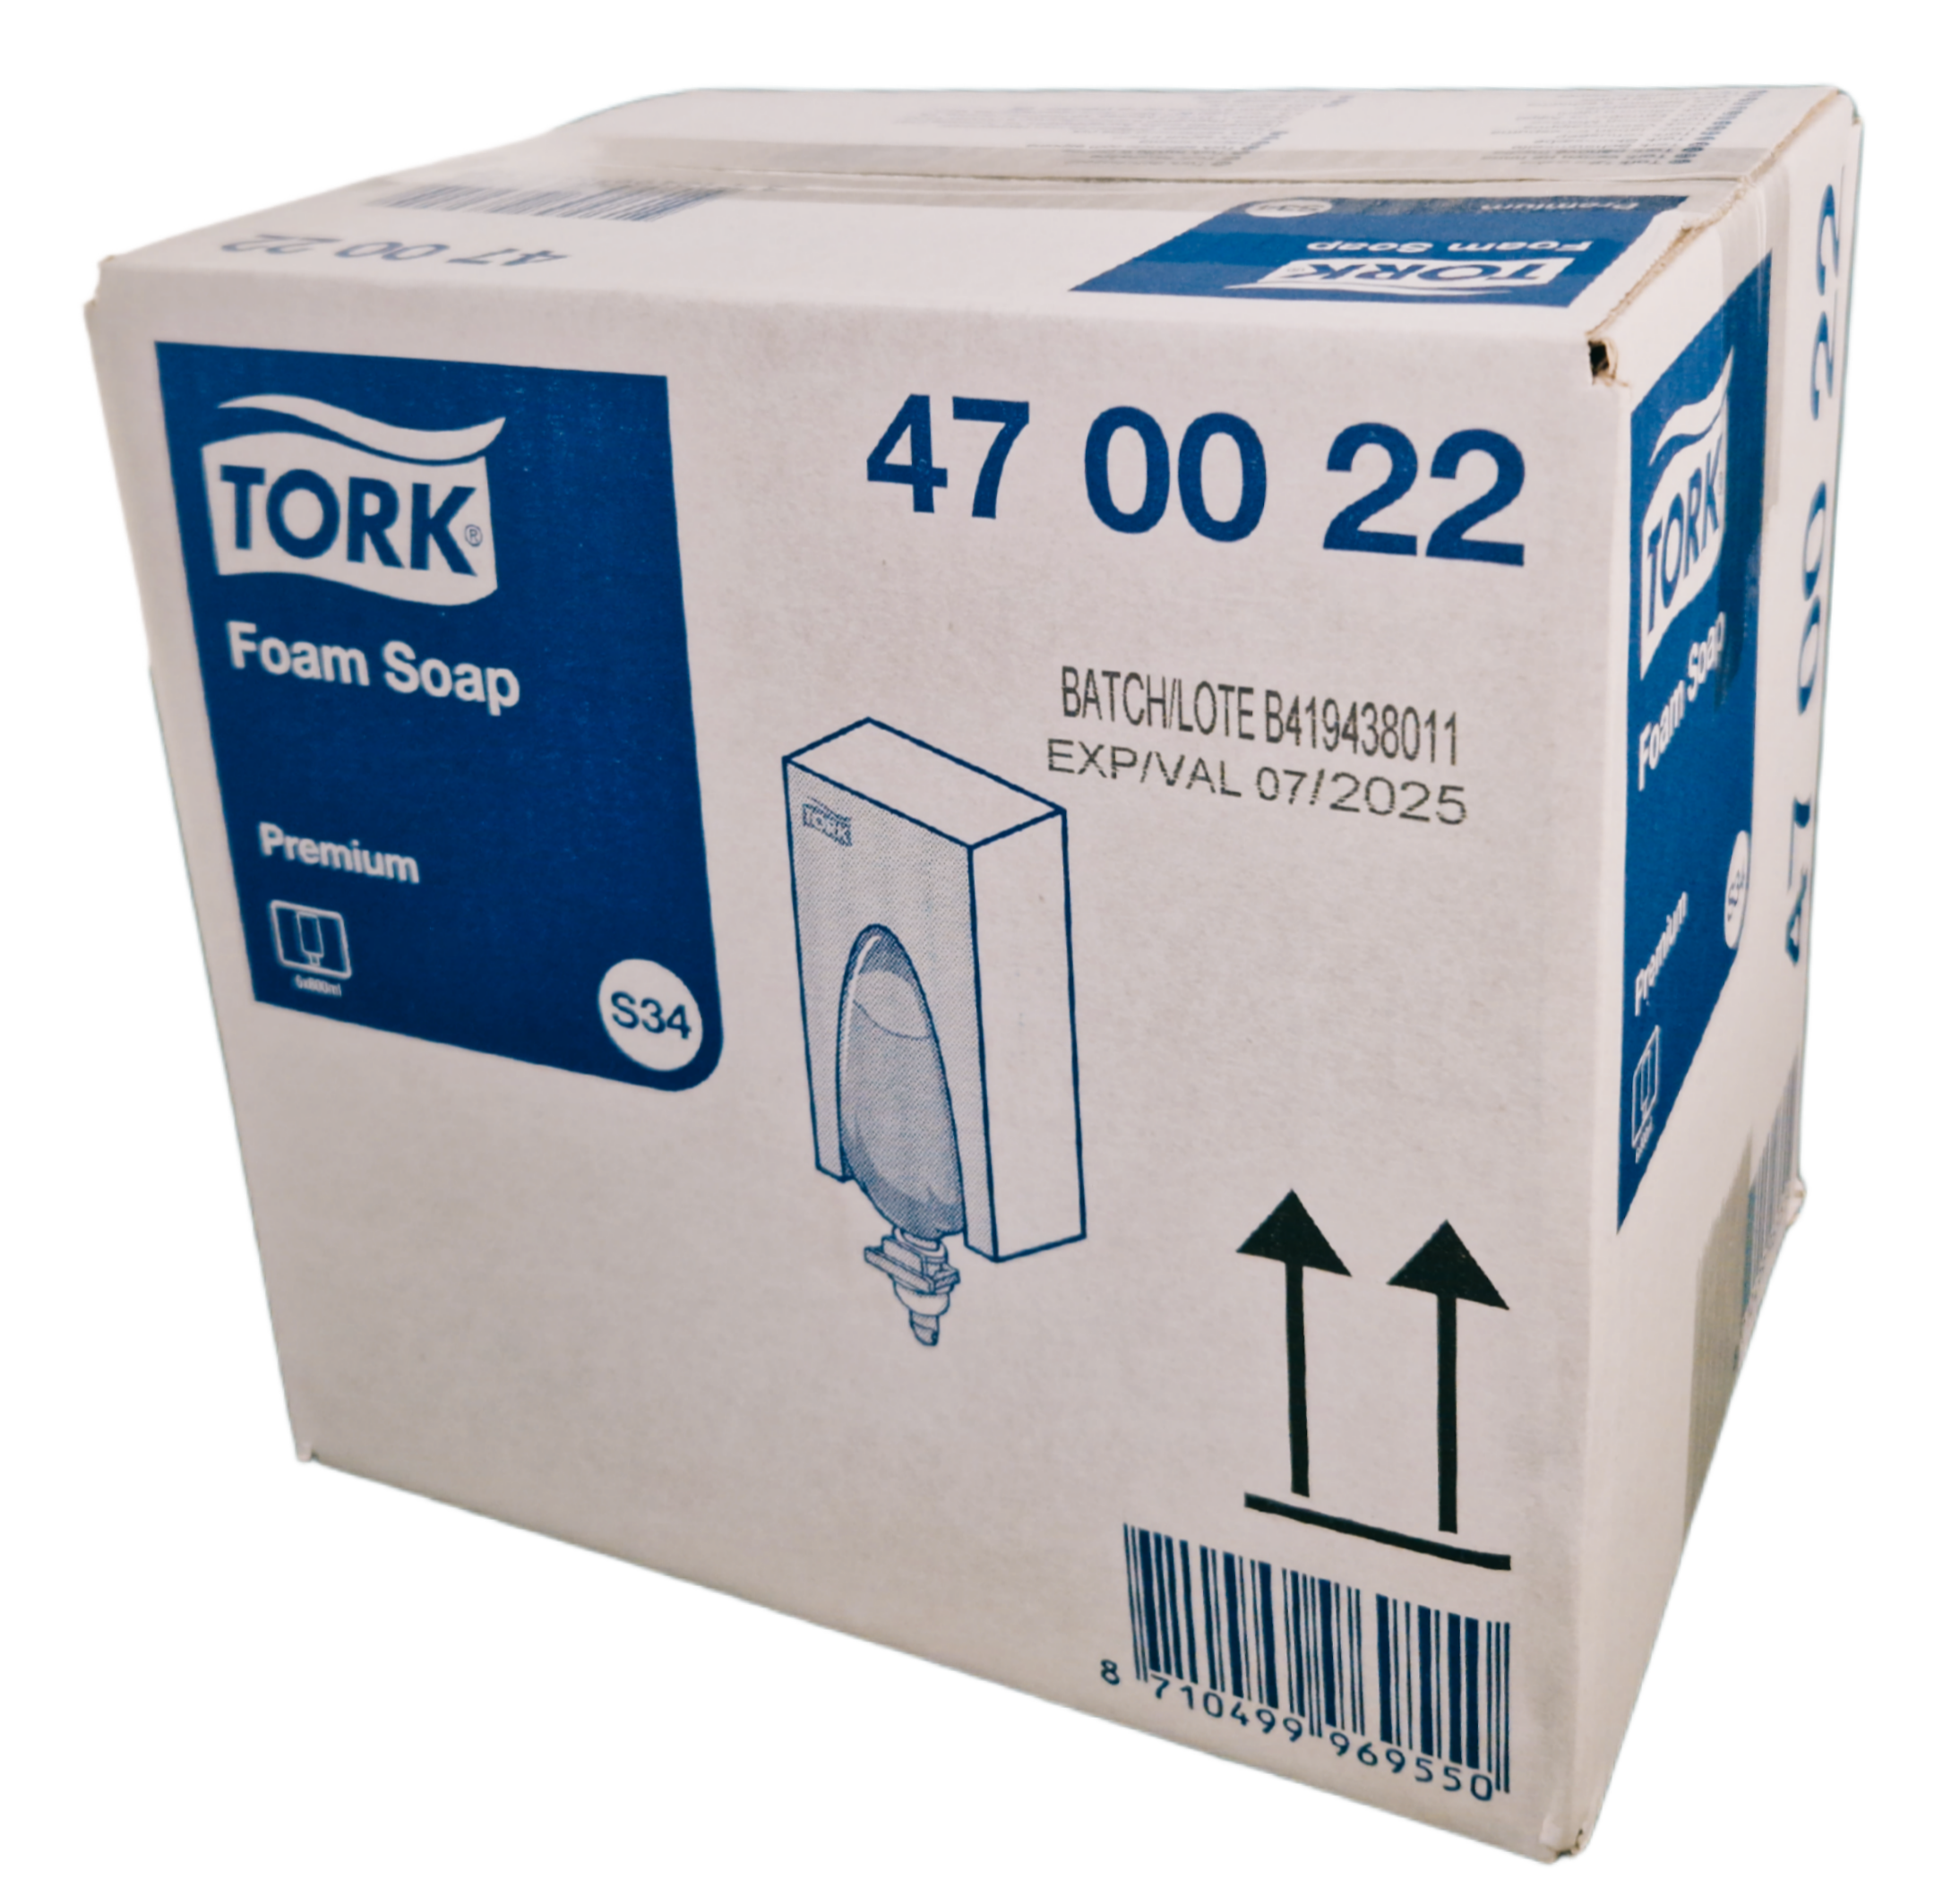 Tork Premium Schaumseife S34 6 x 800ml - 470022